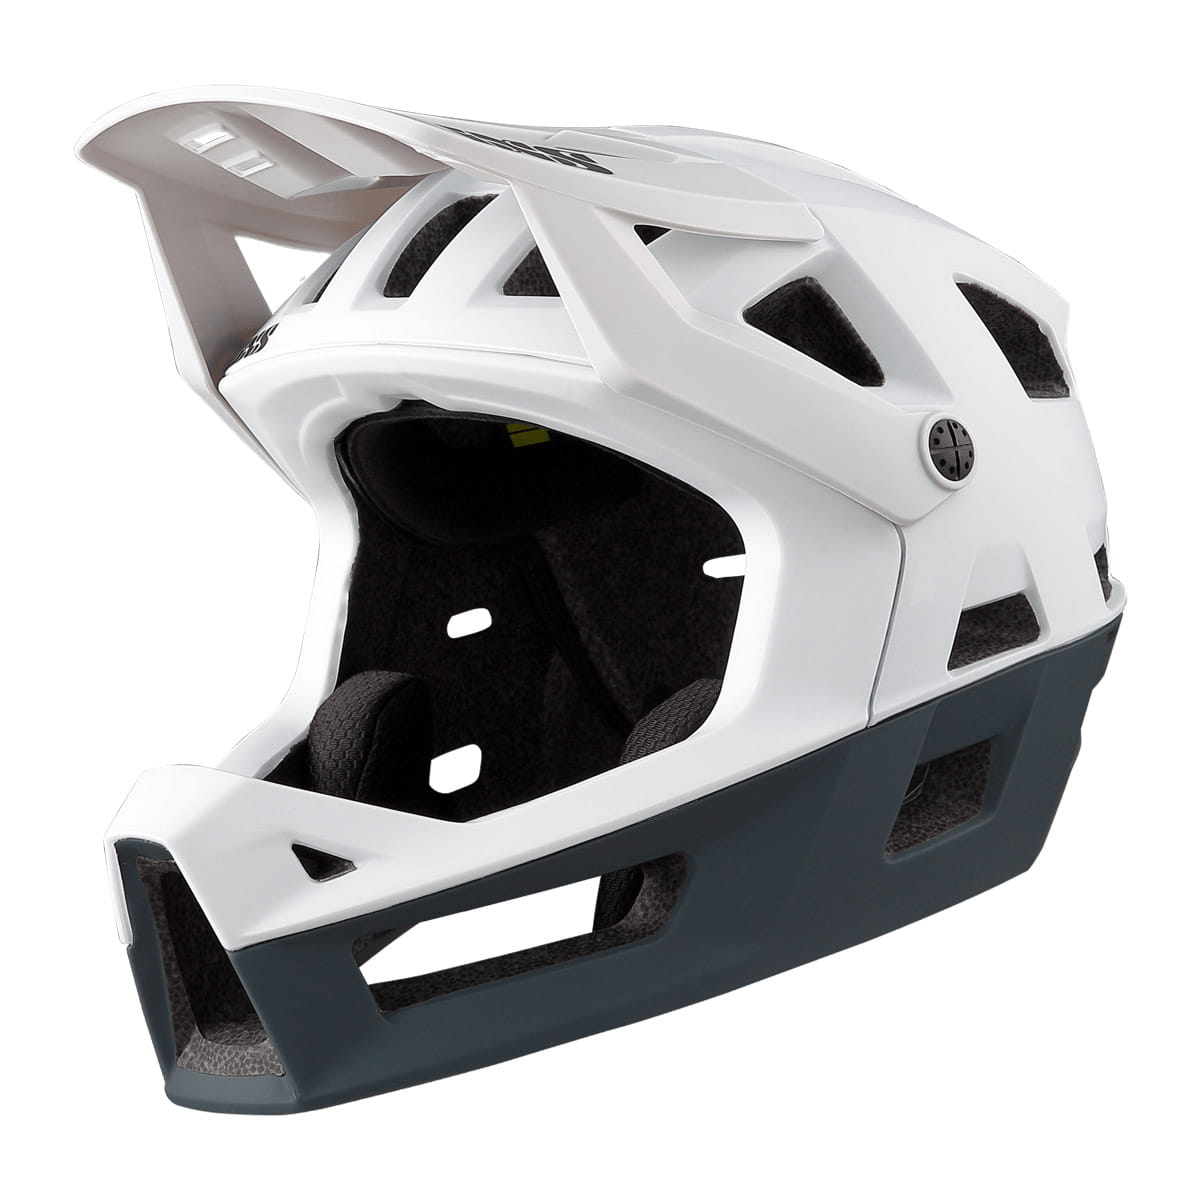 Seven Unisex Adult Helmet - Medium Blue/Grey-S/M M5 54-58 cm